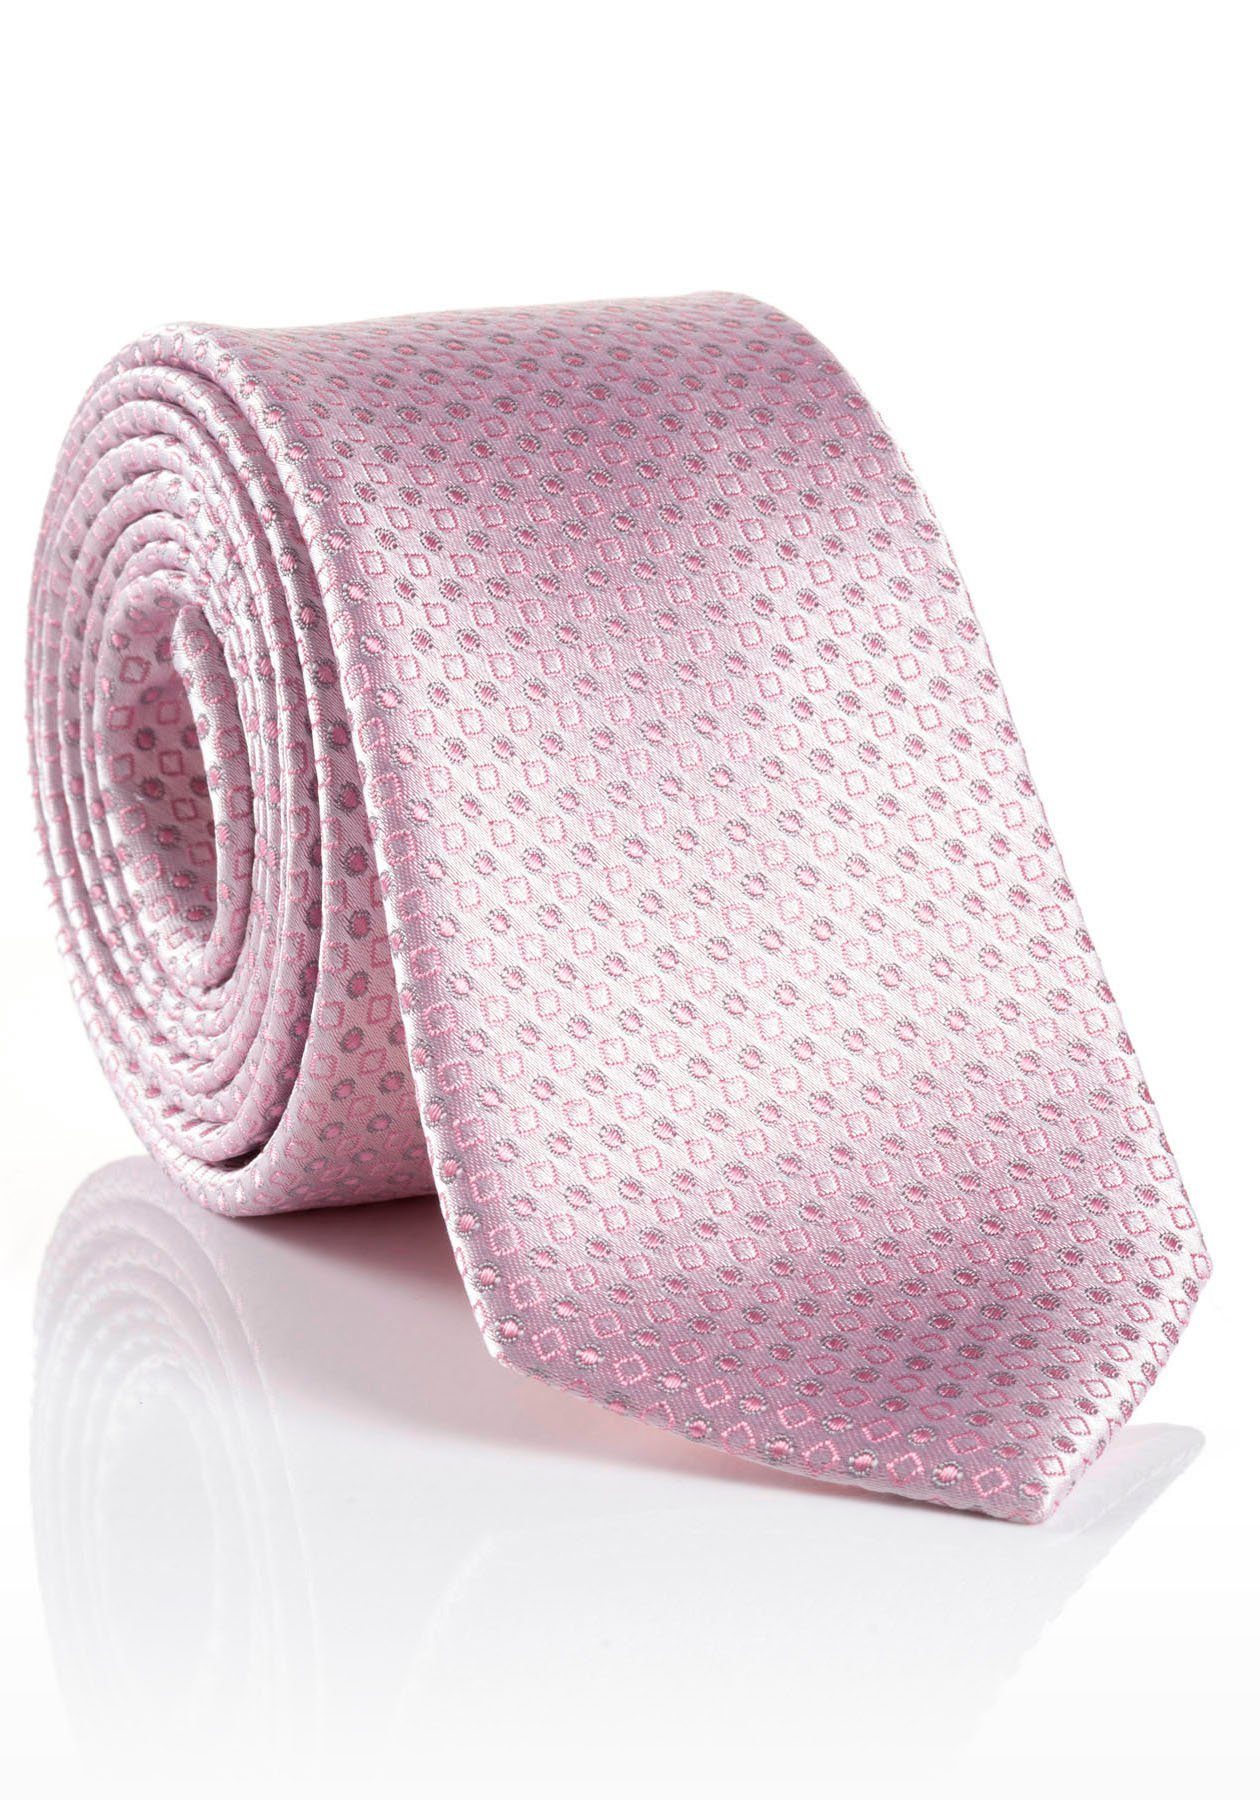 MONTI Krawatte LEANO Seide, reiner aus Krawatte Minimal-Design,Pastellfarben